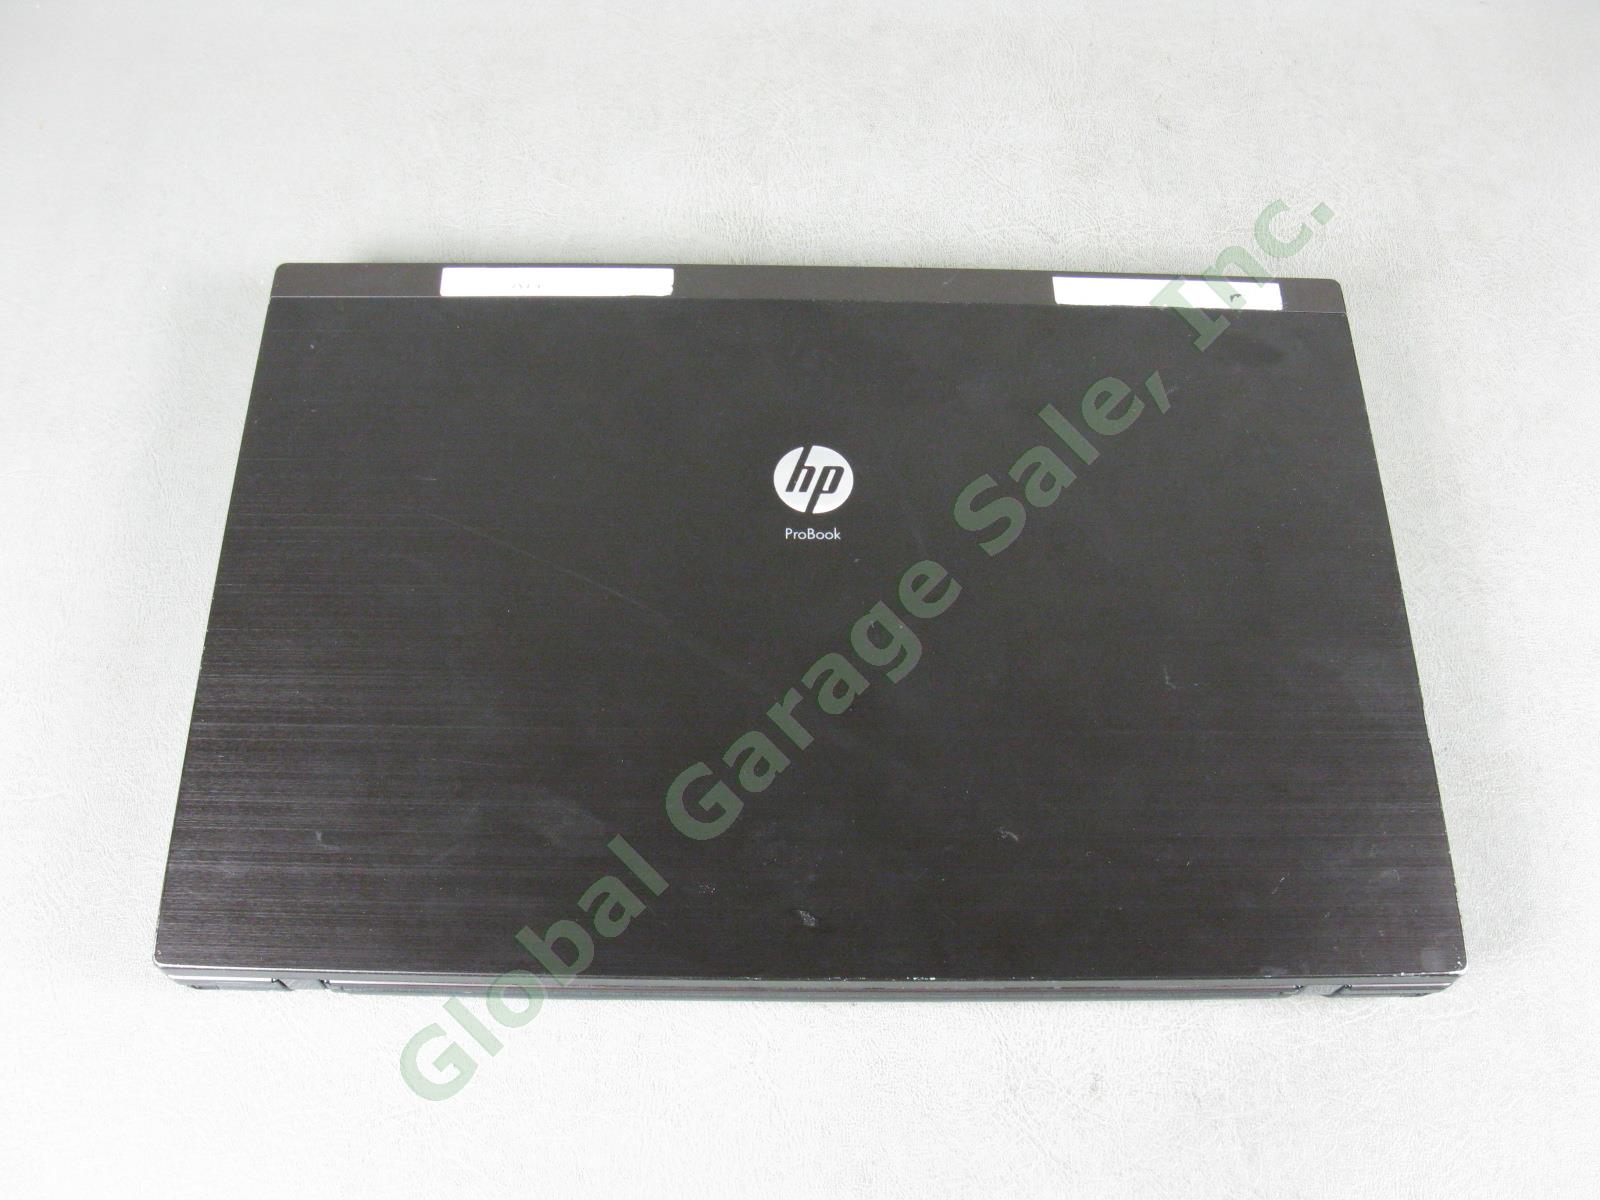 HP 4520s Laptop Computer Intel Core i5 2.67GHz 2GB 500GB HDD Windows 7 Pro NR! 3